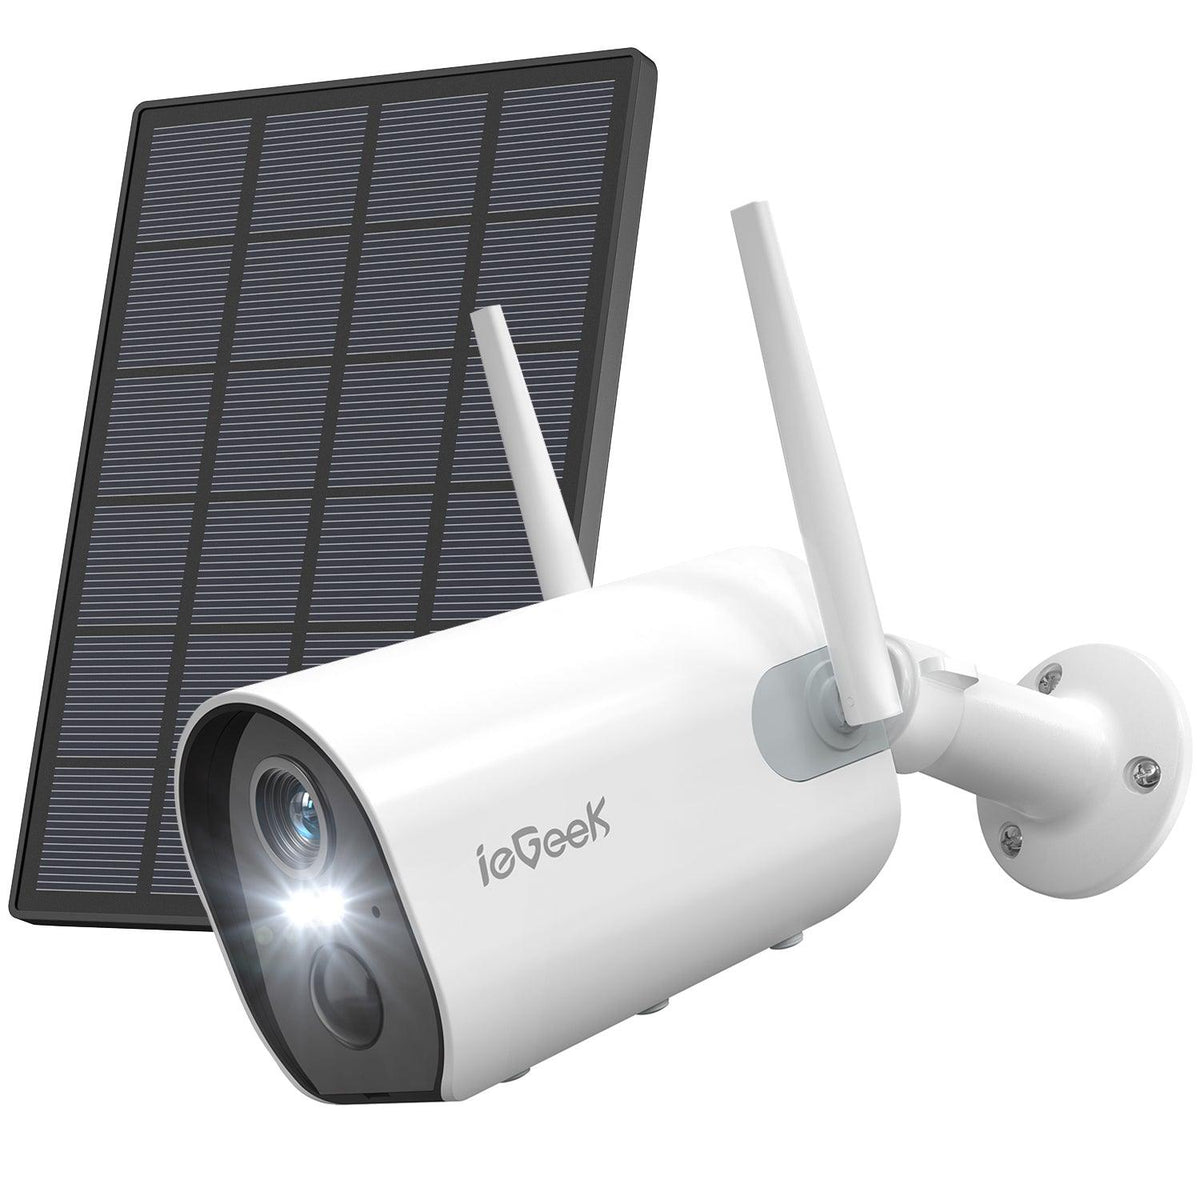 ieGeek 2K Caméra Surveillance WiFi Extérieure sans Fil Solaire 360 °  Alexa/IP65